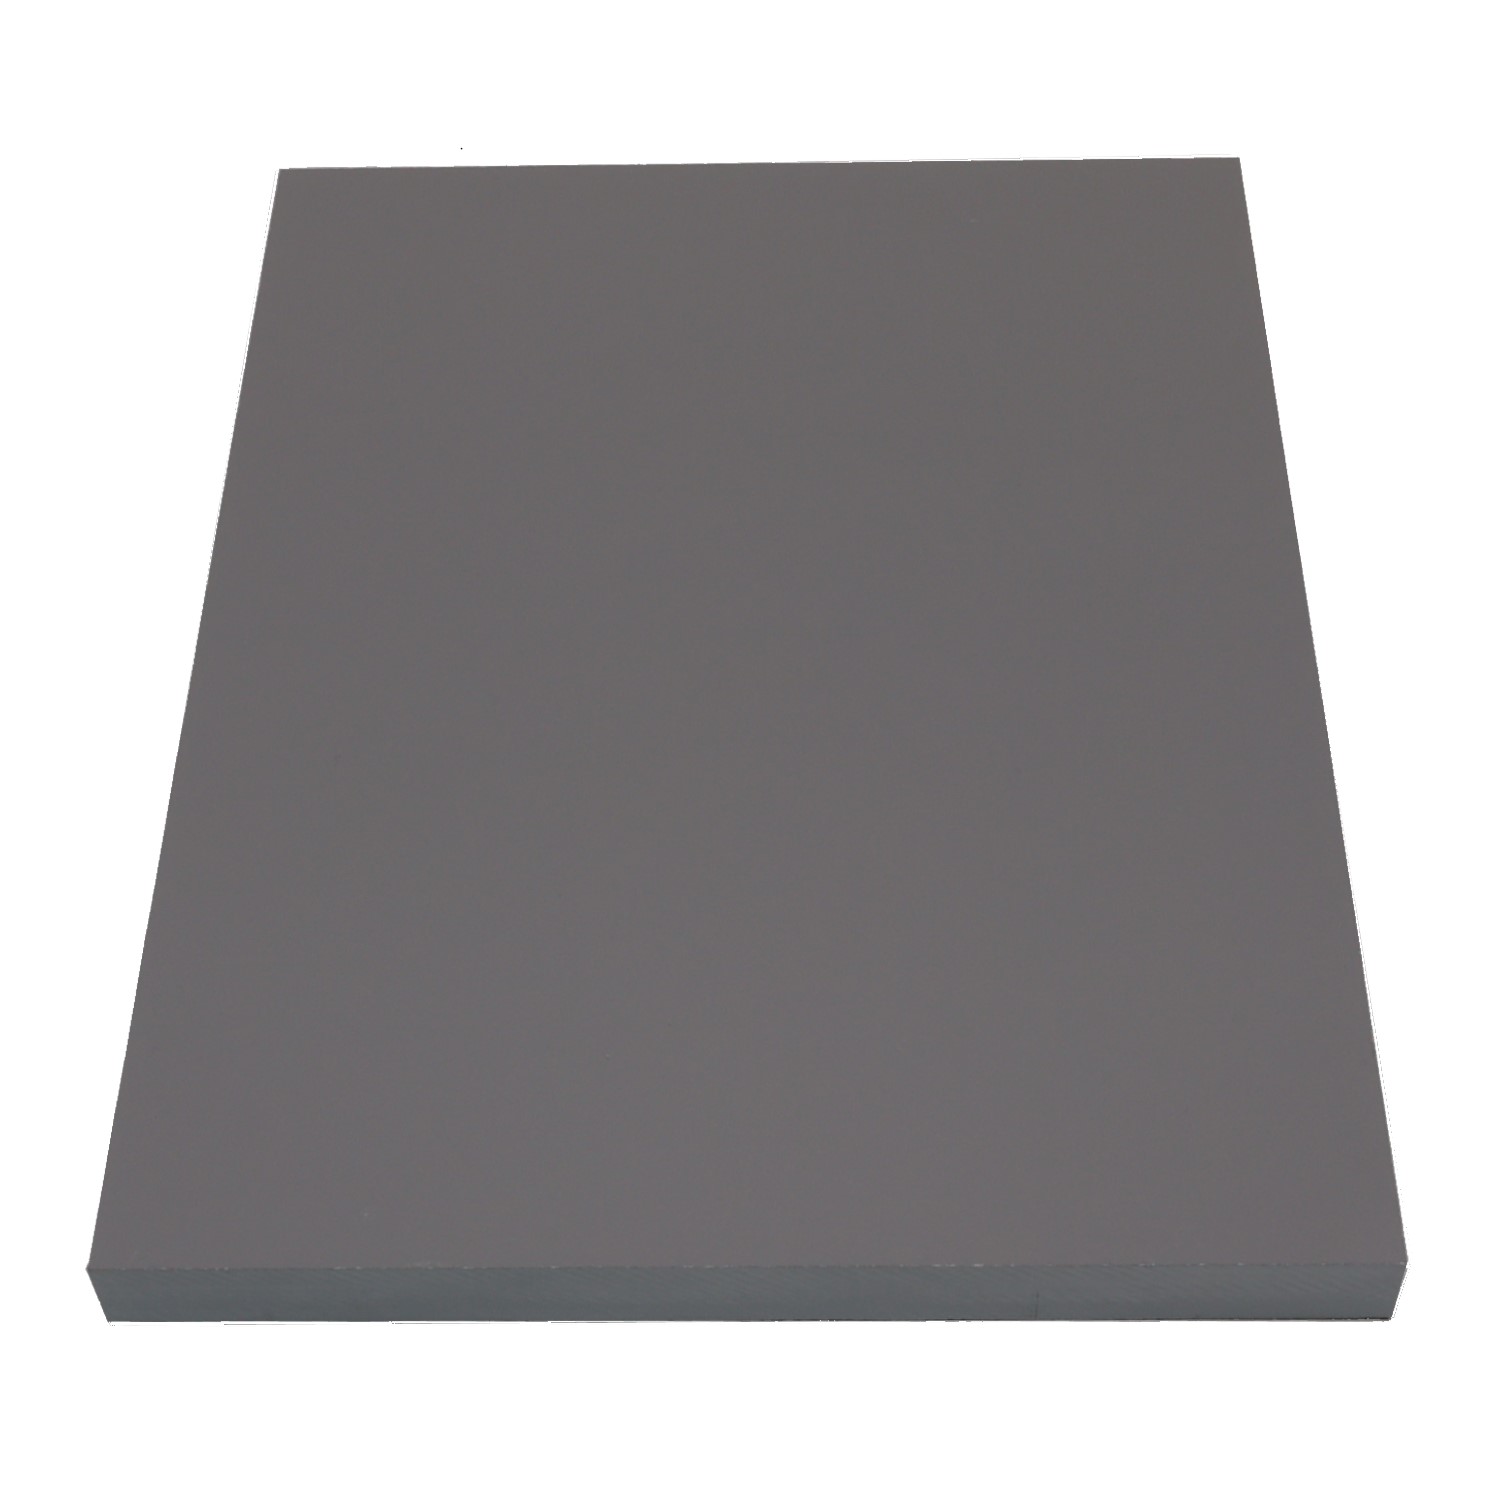 Sample Carbon compact platinum grey 8109 6" x 8"